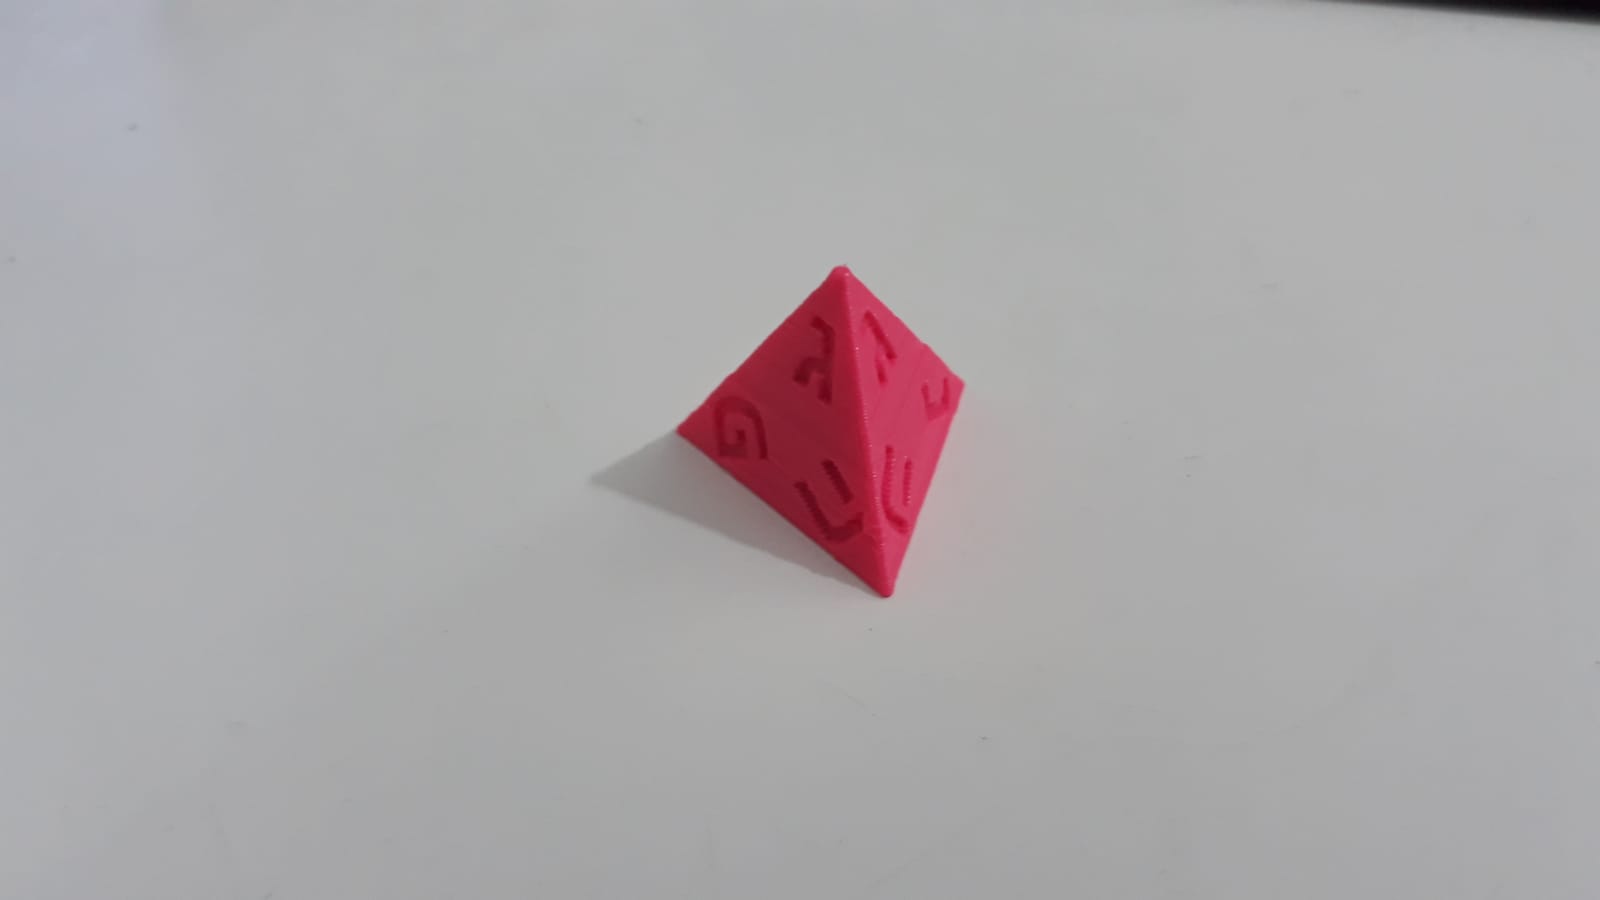 Tetrahedral dreidel